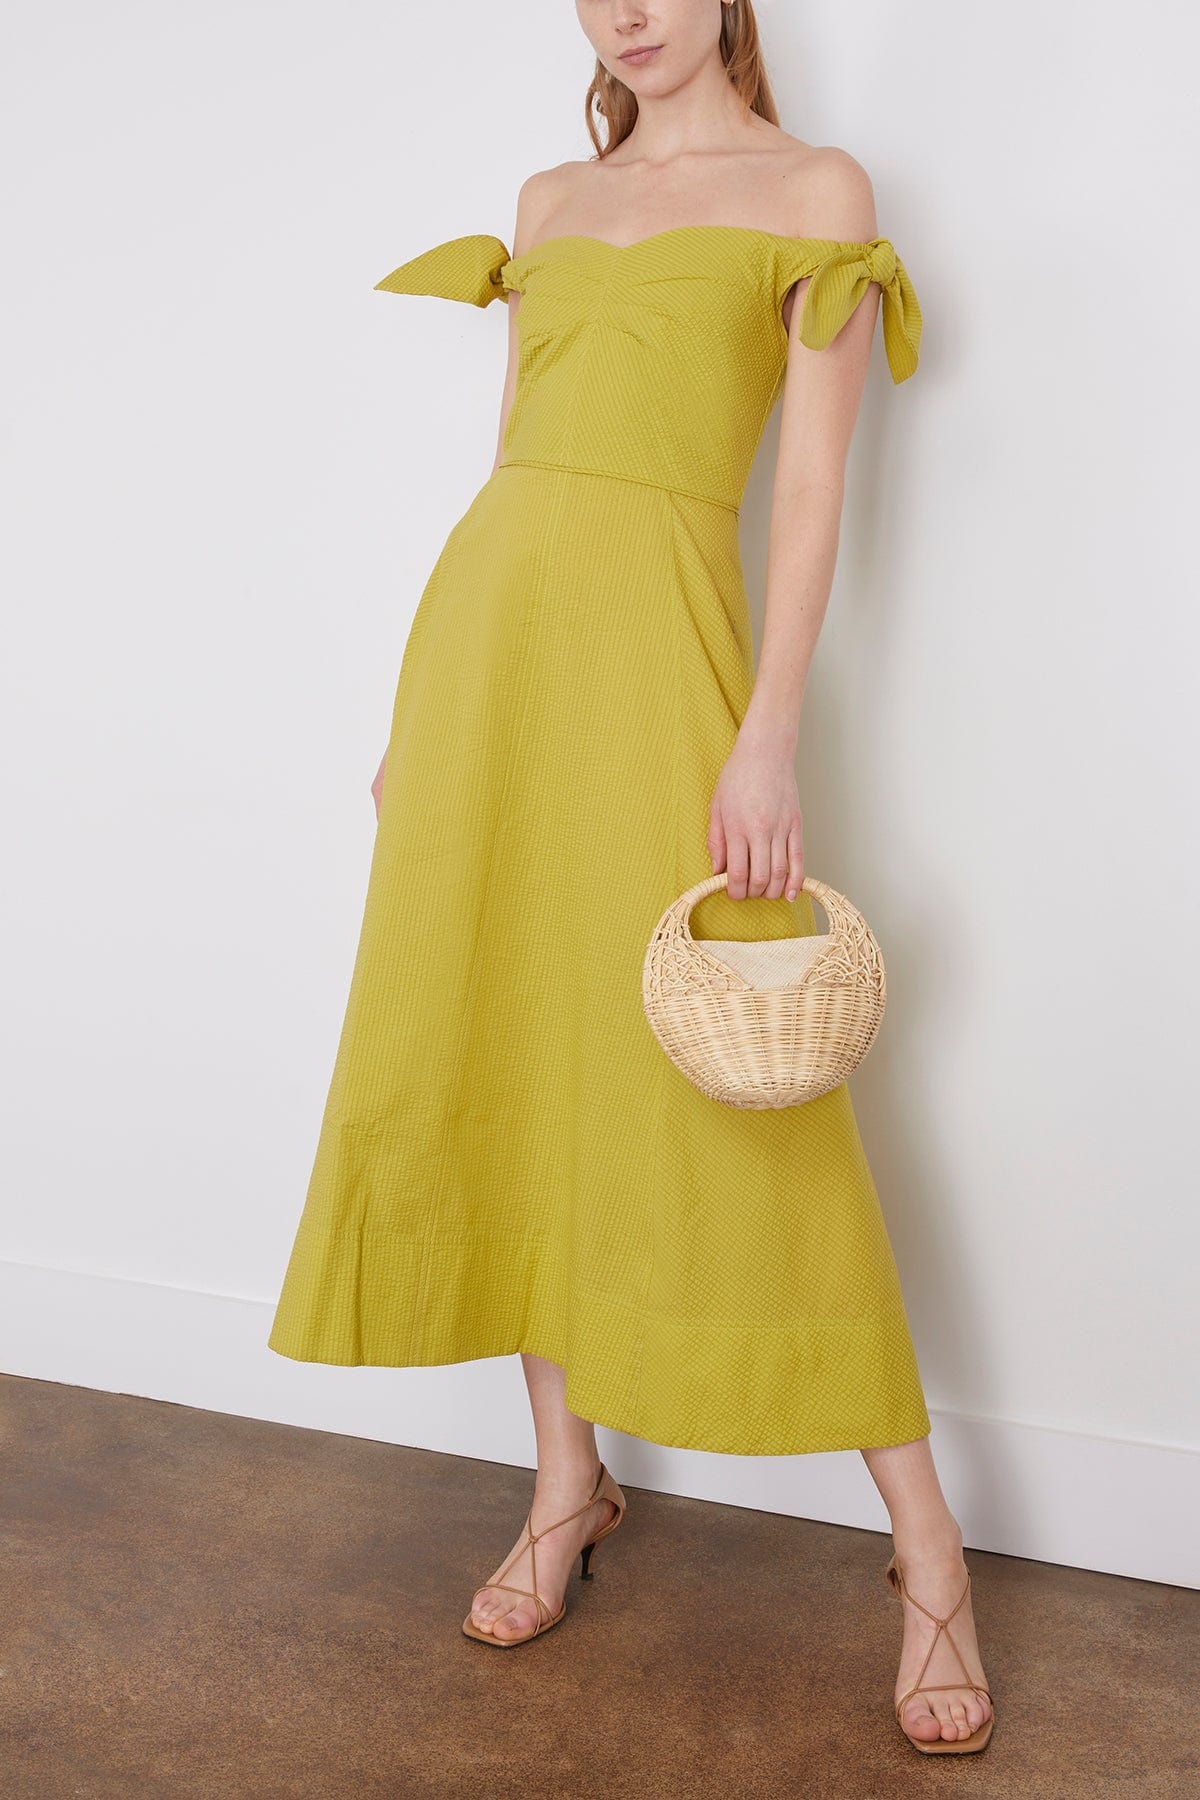 Tanya Taylor Dresses Ashland Dress in Lime (TS) Tanya Taylor Ashland Dress in Lime (TS)